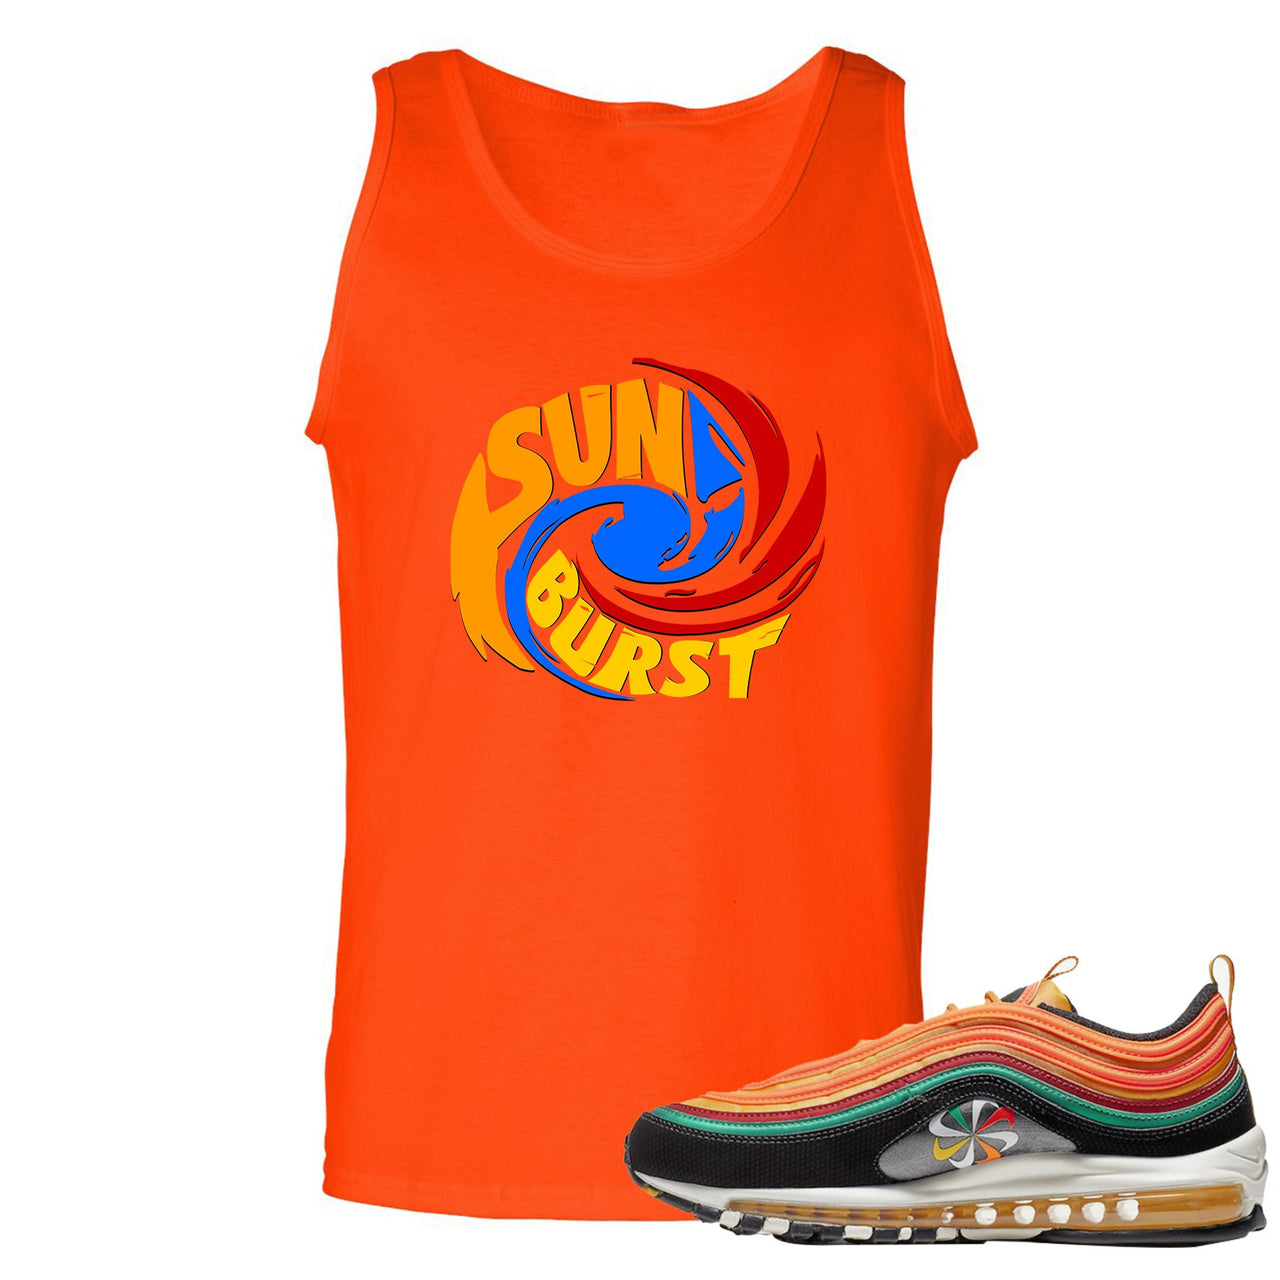 Printed on the front of the Air Max 97 Sunburst orange sneaker matching tank top is the sunburst hurricane logo